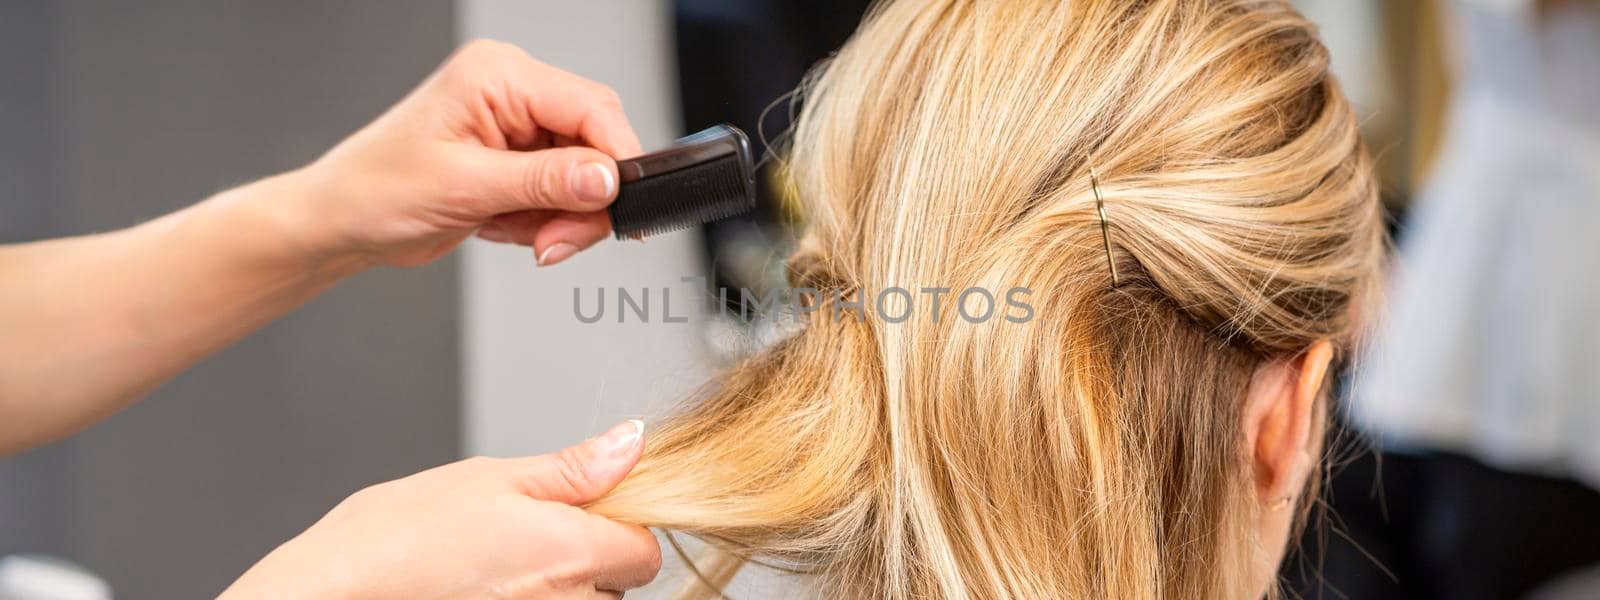 Hairdresser combs hair of woman by okskukuruza